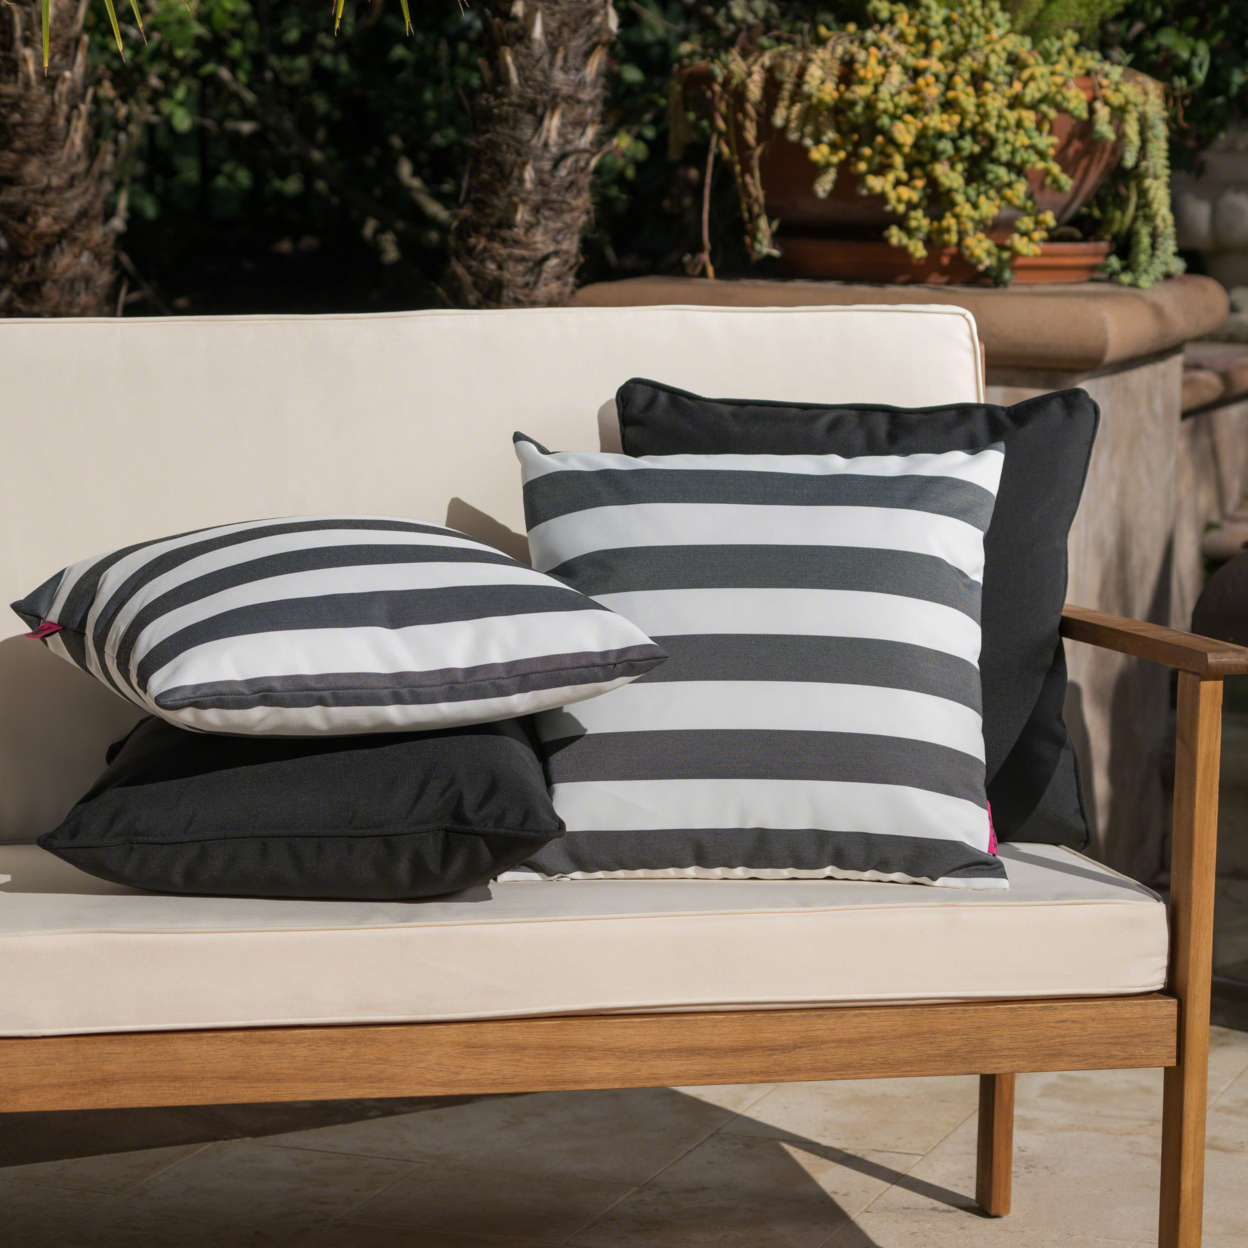 La Jolla Outdoor Striped Water Resistant Square Throw Pillows - Set Of 4 - Dark Teal/White - Jailhouse